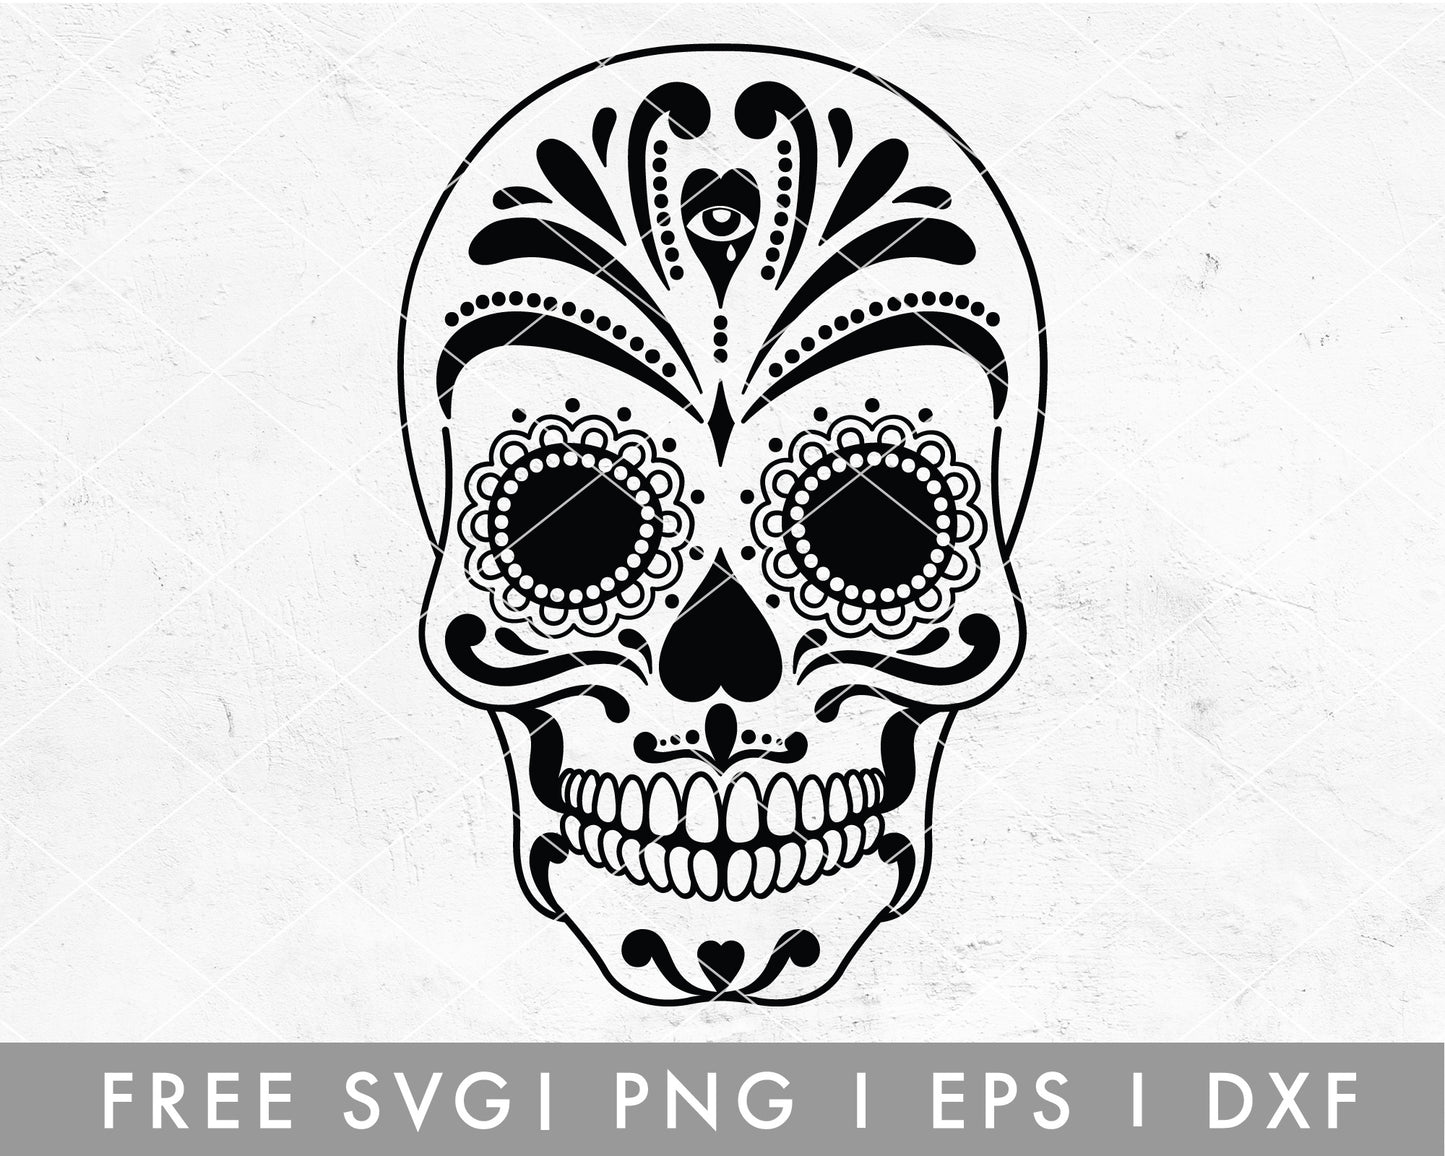 FREE Evil Eye Sugar Skull SVG